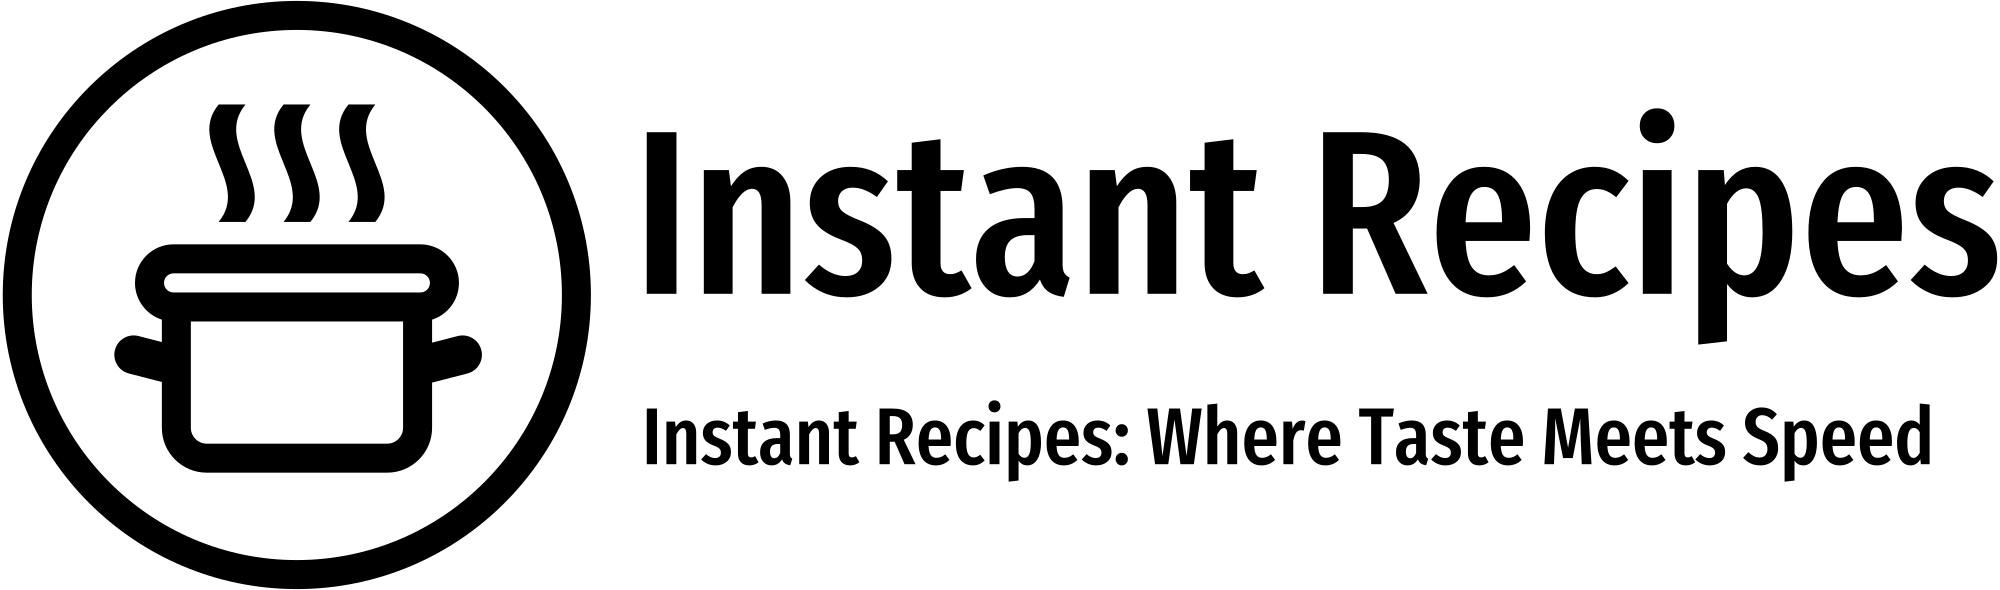 Instant Recipes